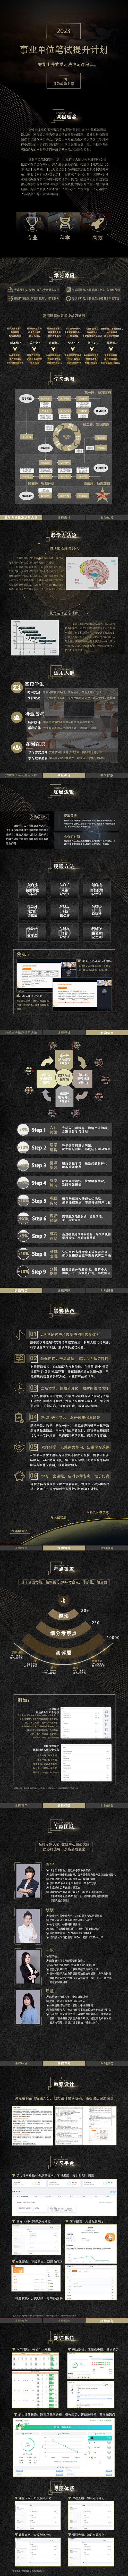 https://simg01.gaodunwangxiao.com/uploadfiles/product-center/202309/06/6dc14_20230906153644.jpg